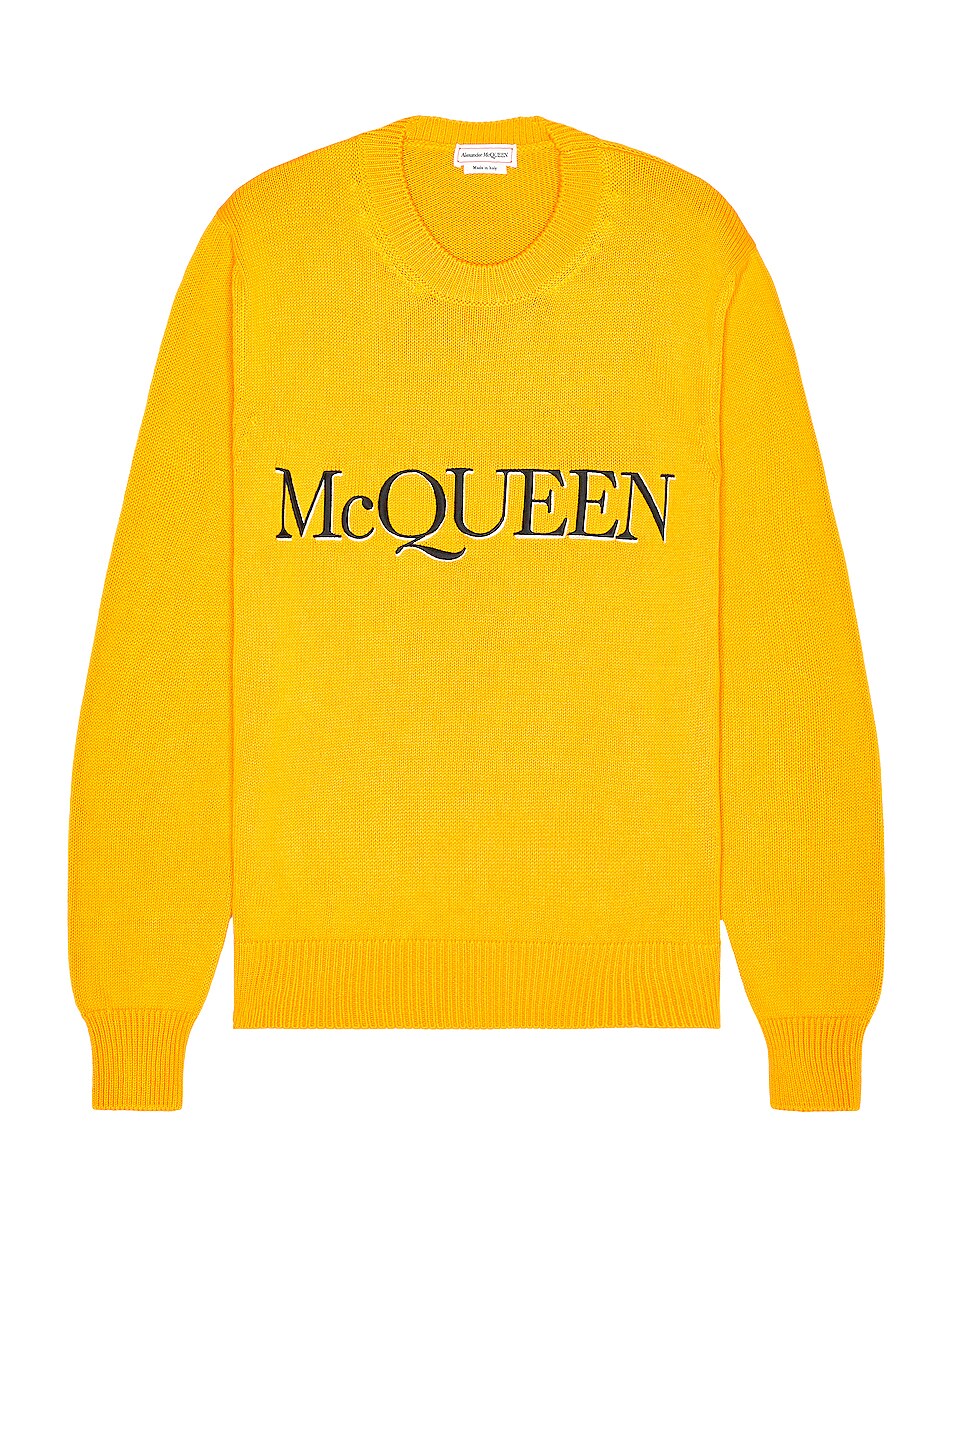 Image 1 of Alexander McQueen Crew Neck Pullover in Pop Yellow, Black & White